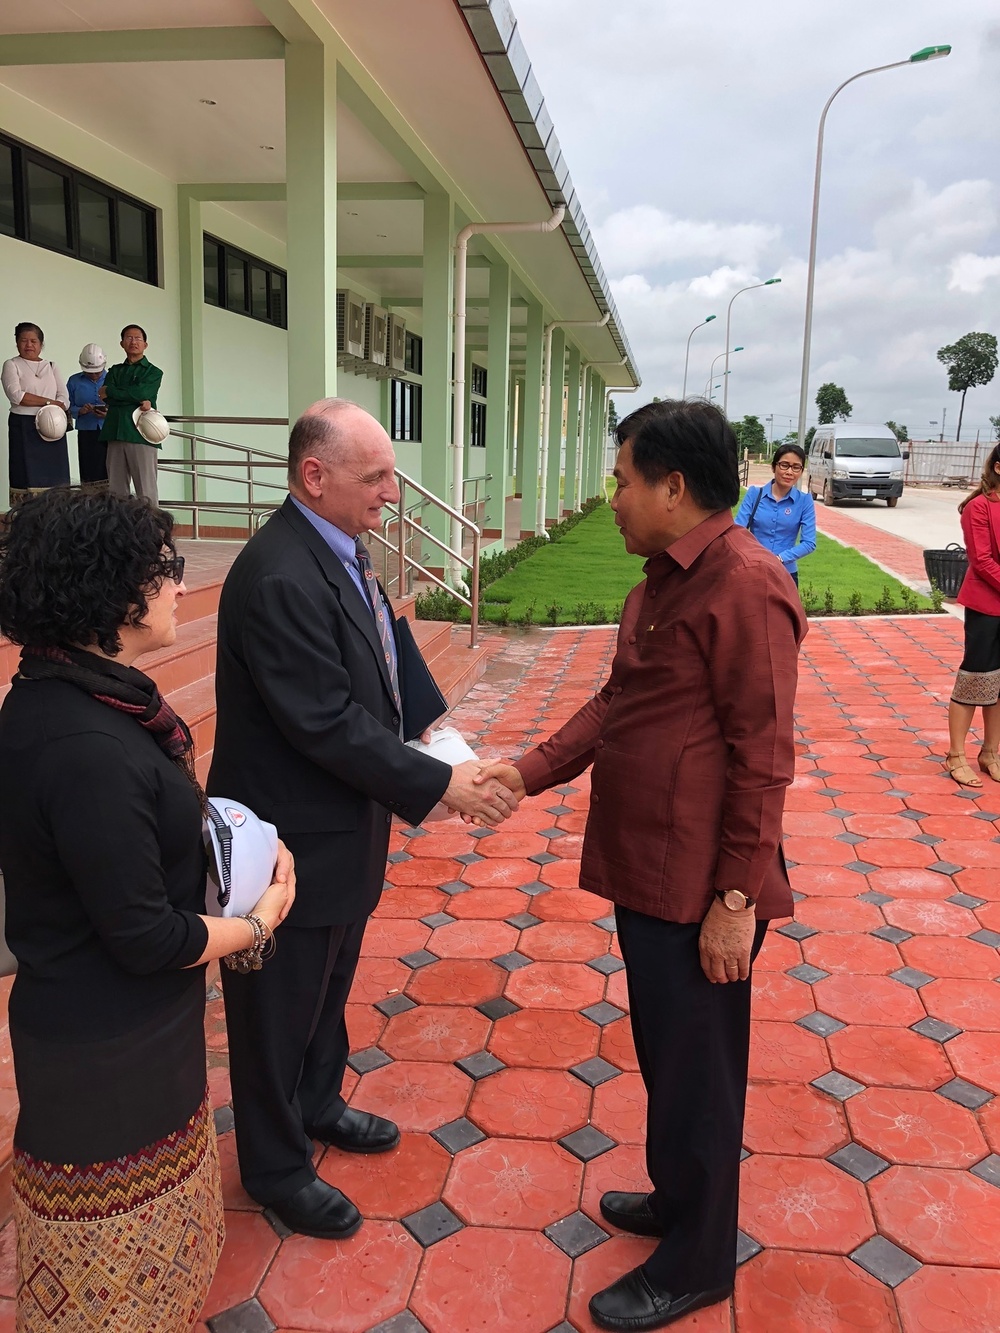 USINDOPACOM Surgeon Visits Laos